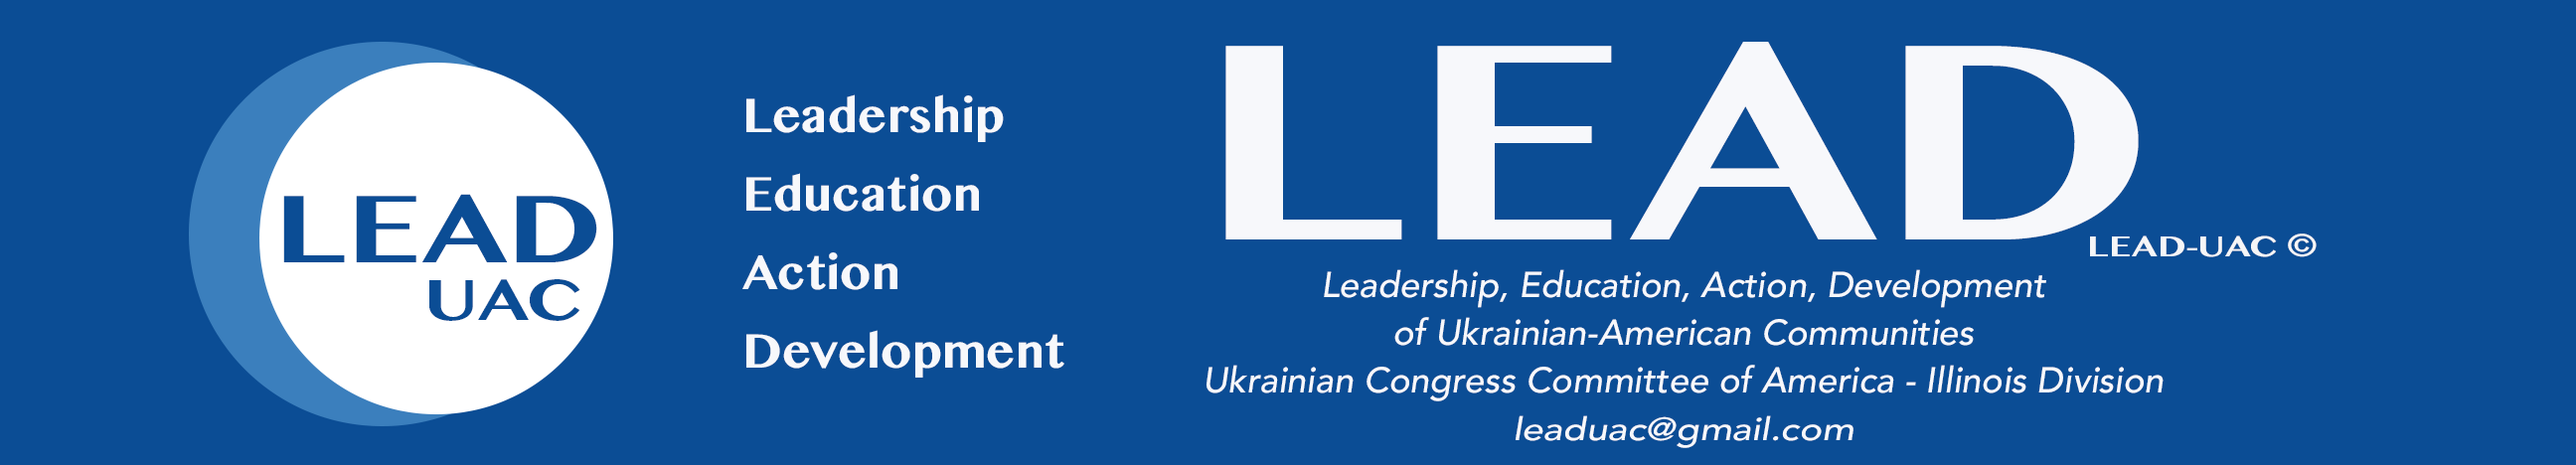 Leadership, Education, Action, and Development of Ukrainian-American Communities. leaduac@gmail.com